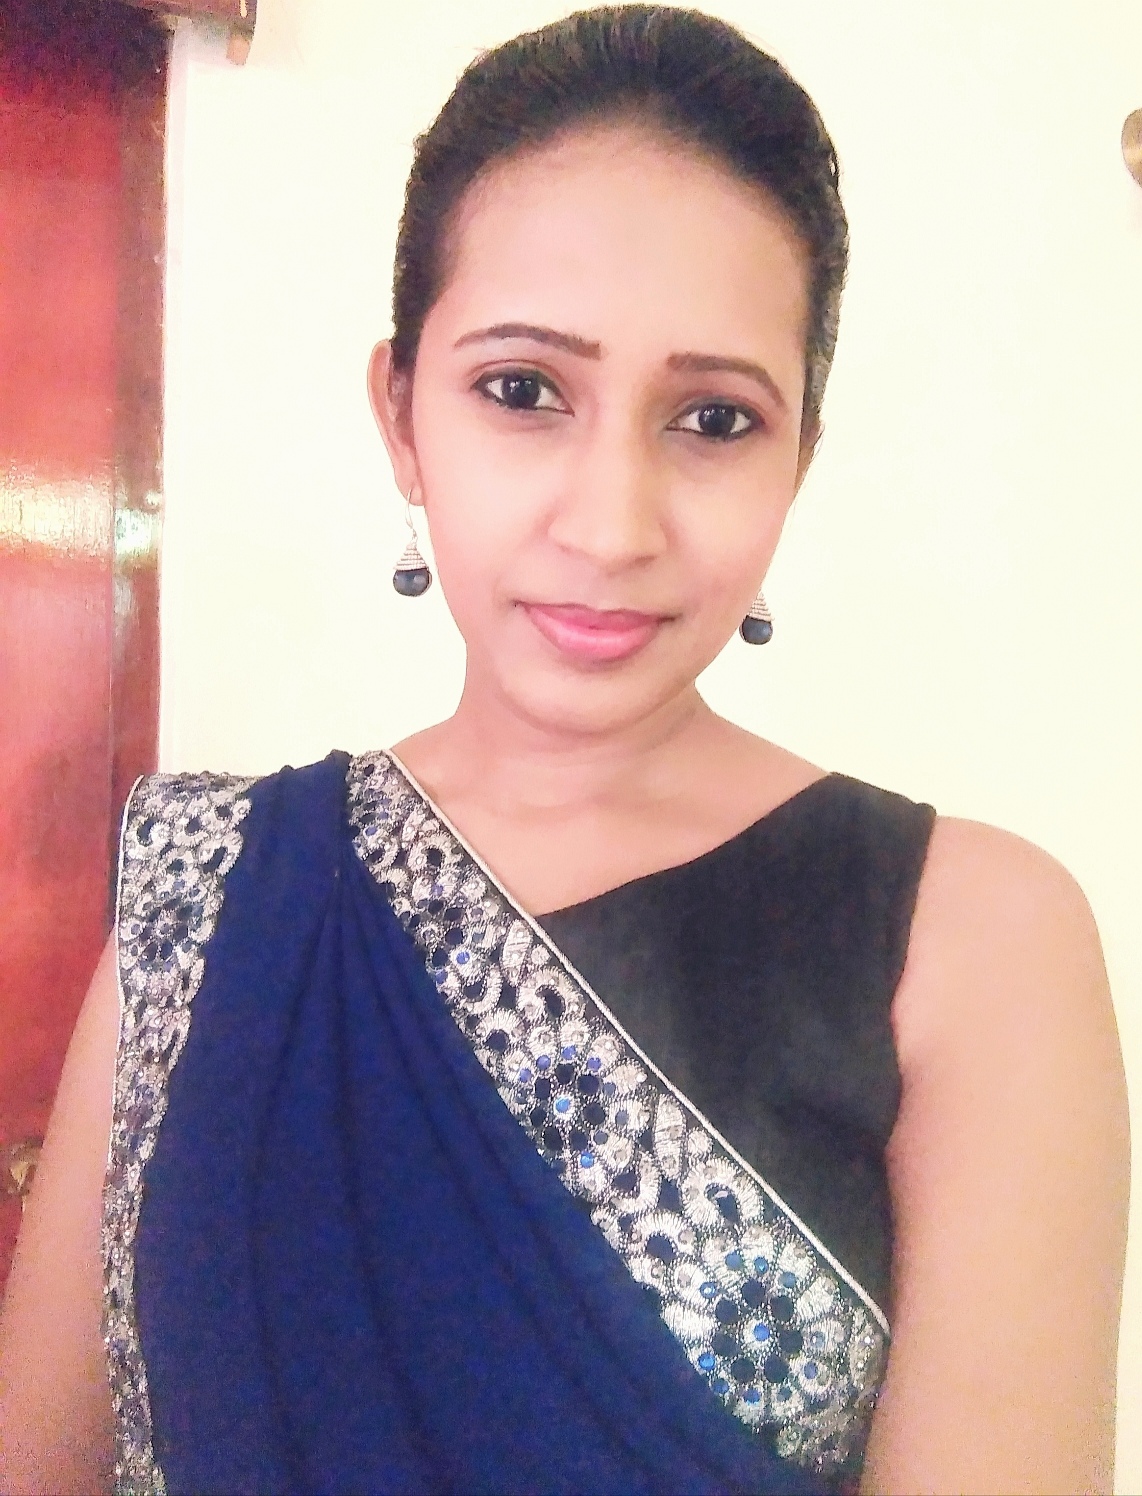 Ms. Madhupali Sugandhika Cooray